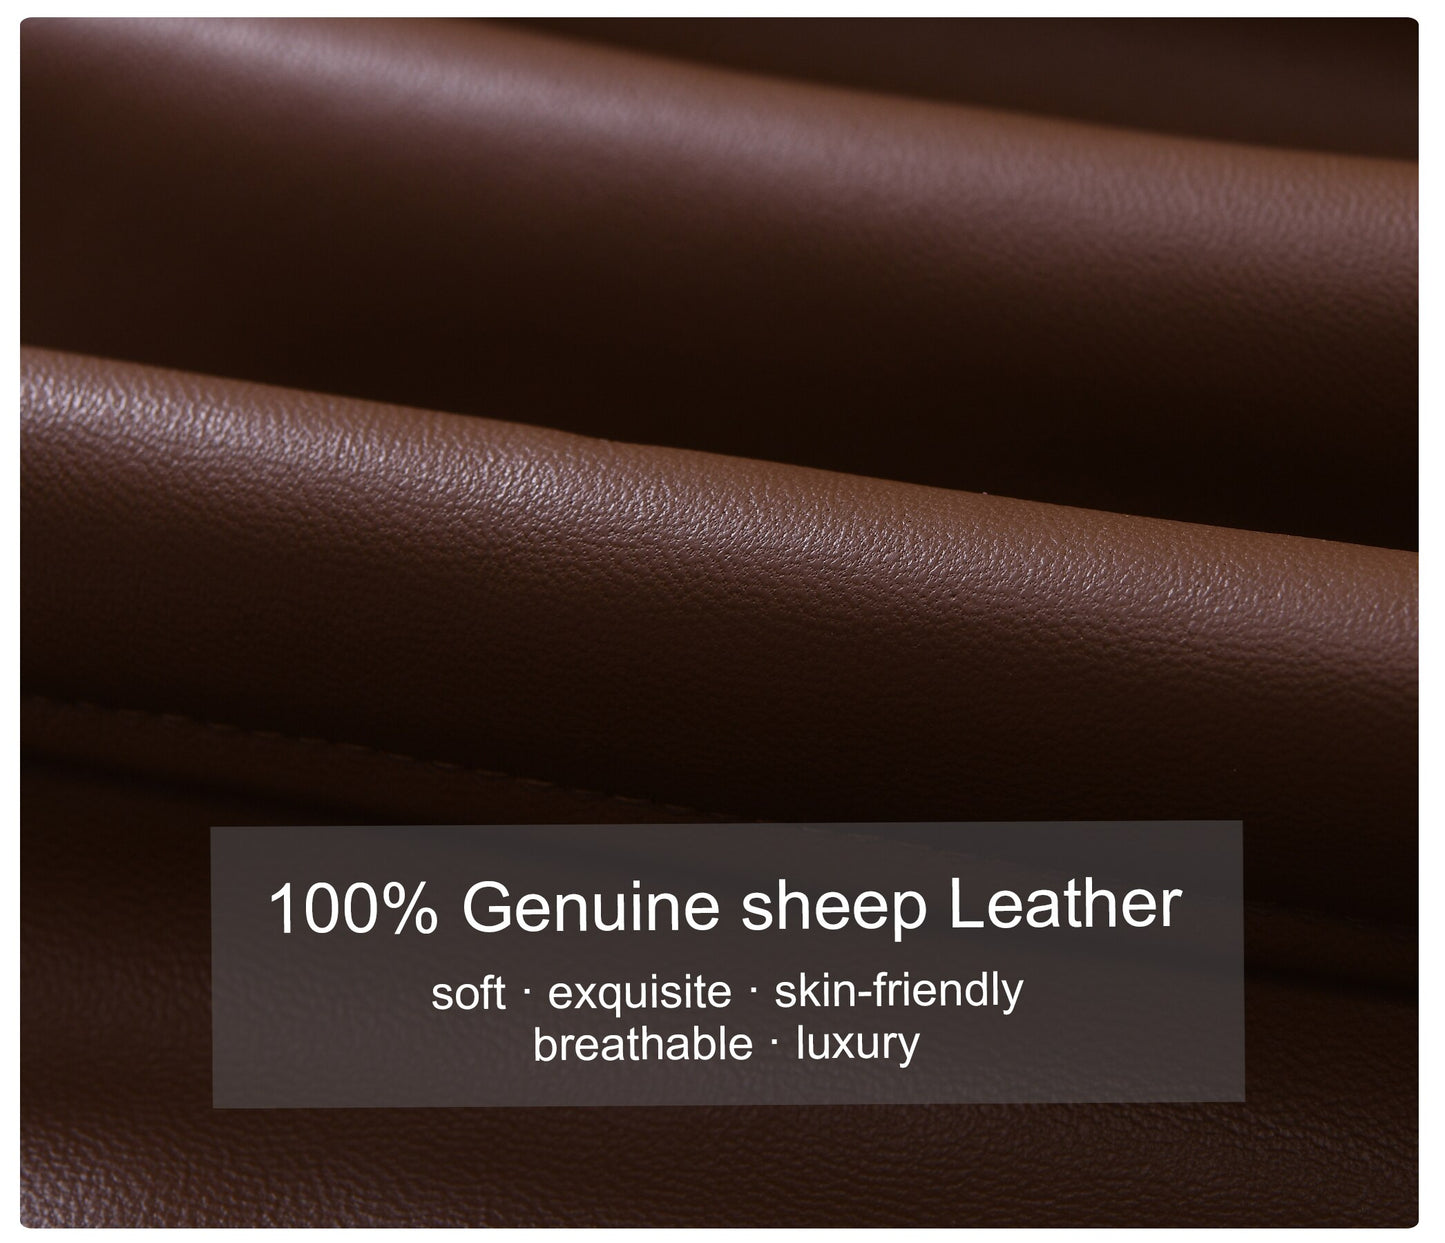 Genuine Leather Moto Jackets Crop (multi-colors)